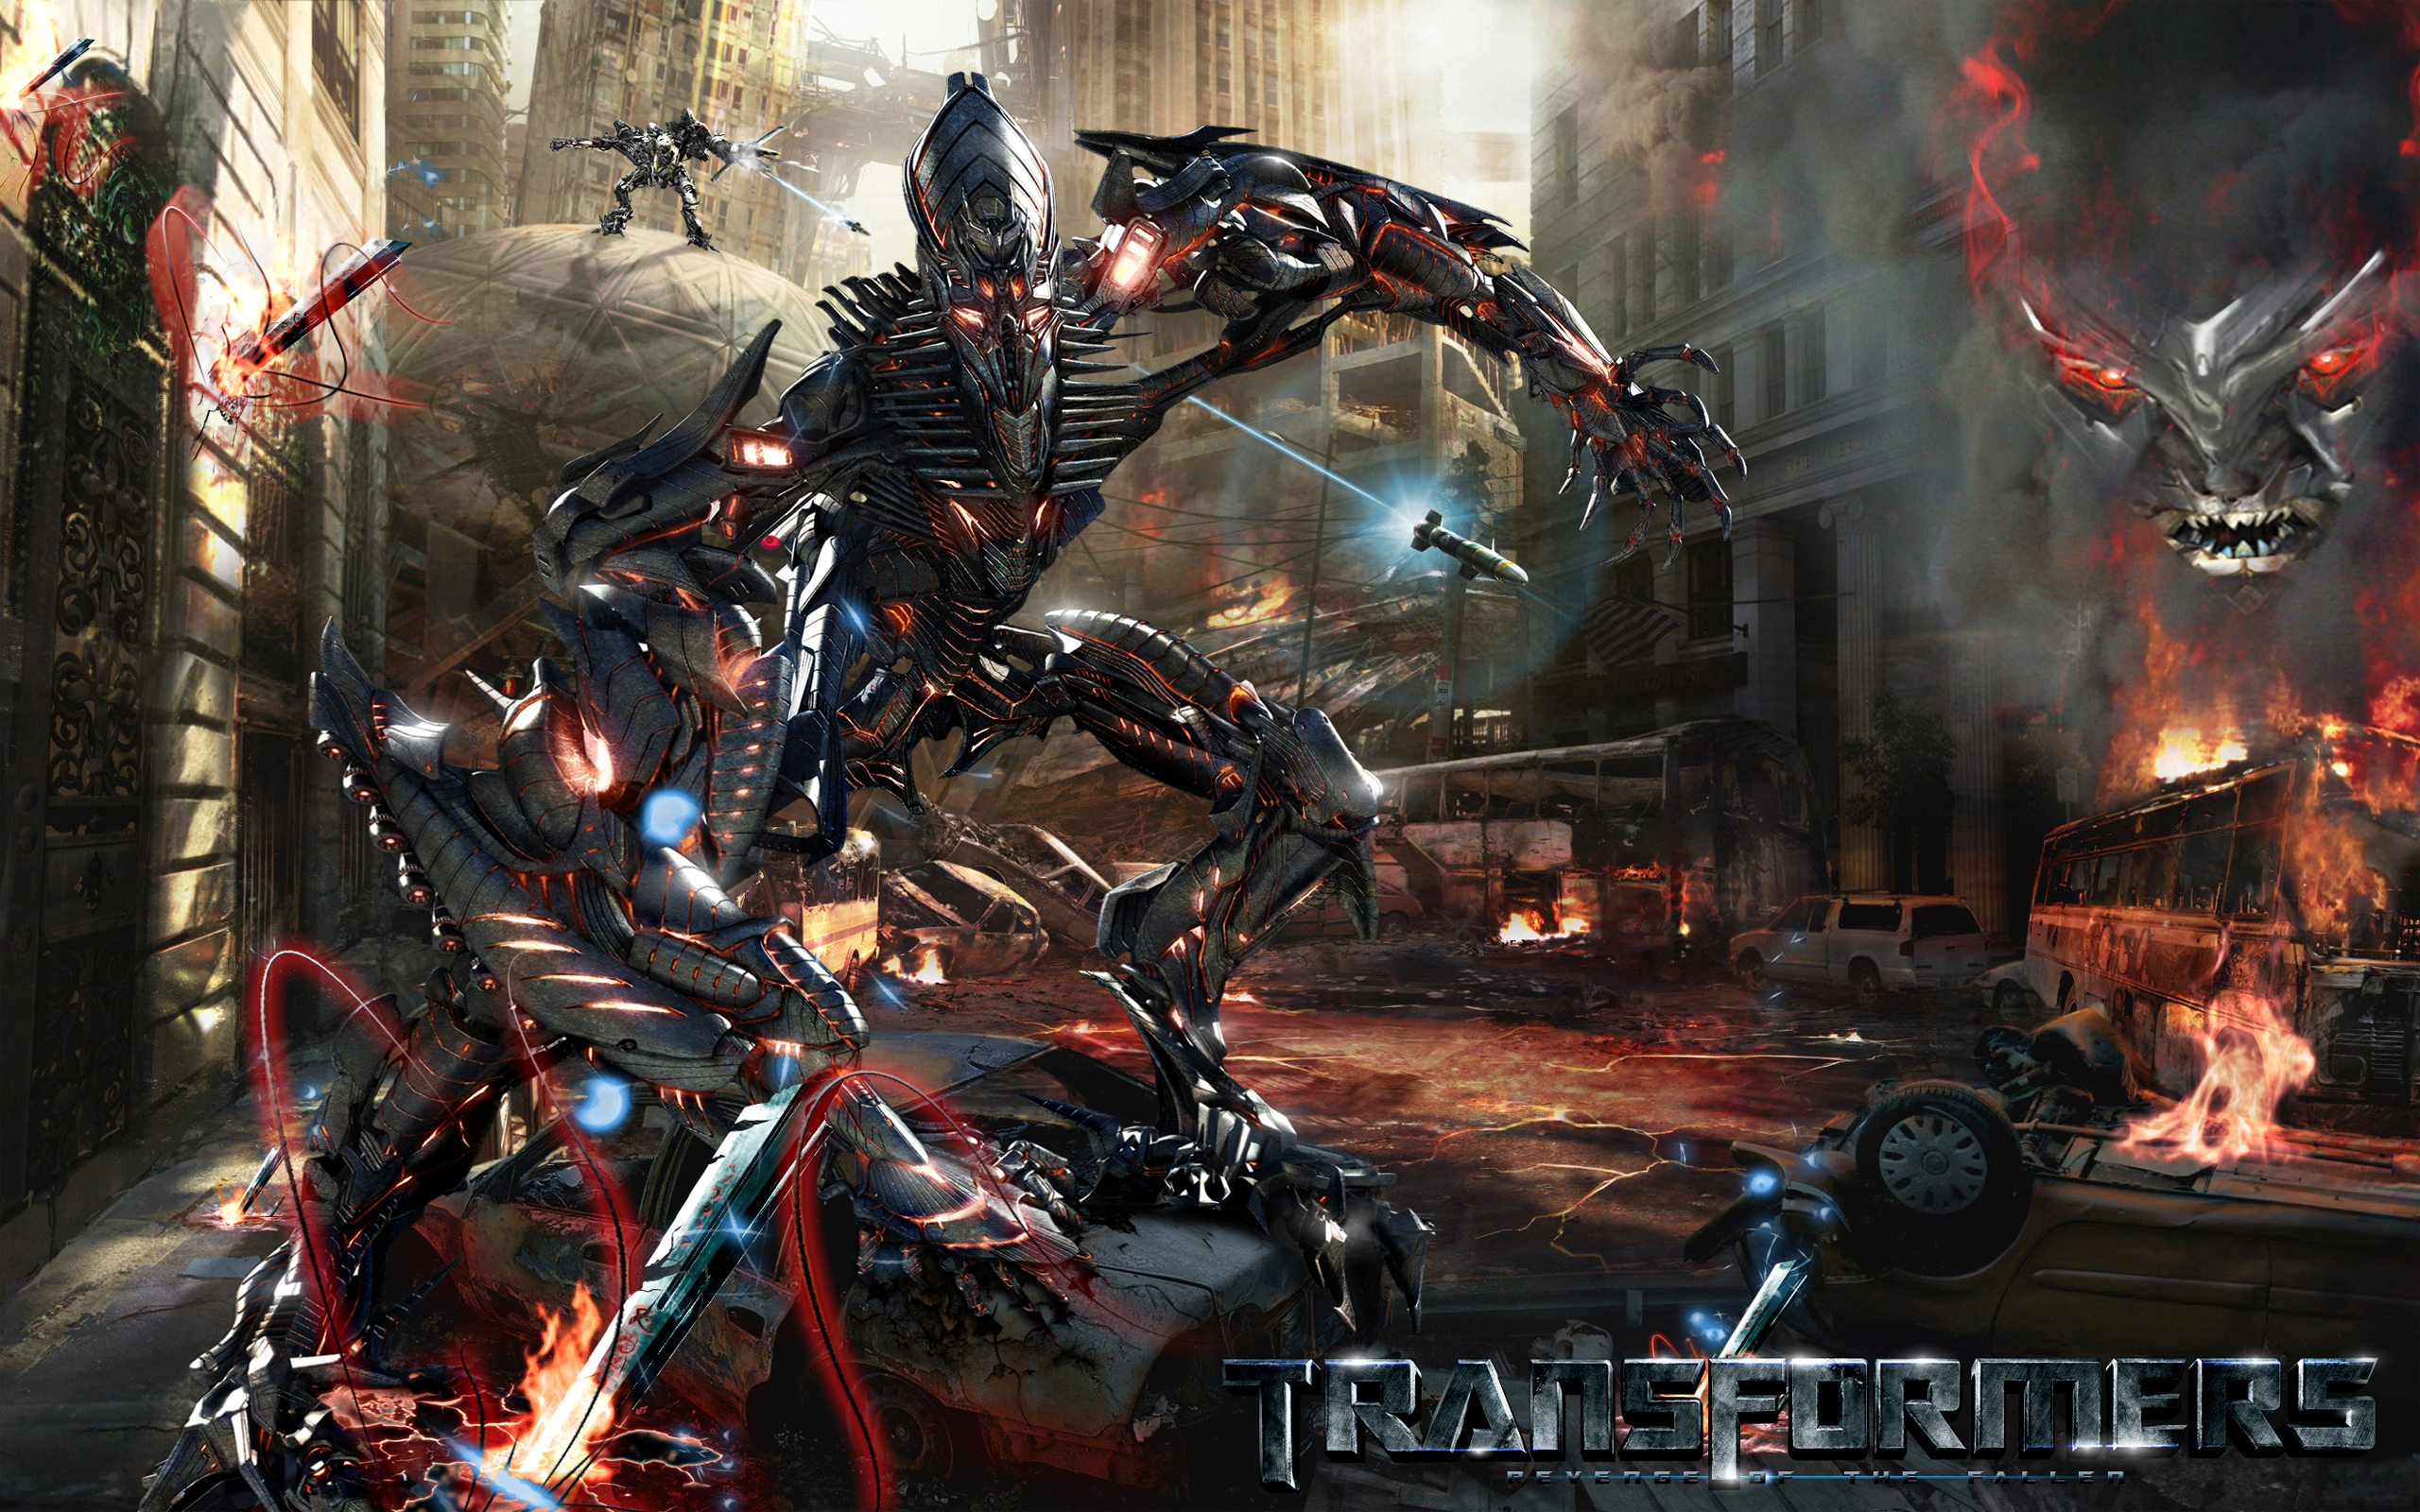 Cool Decepticon Transformers Wallpaper Image High